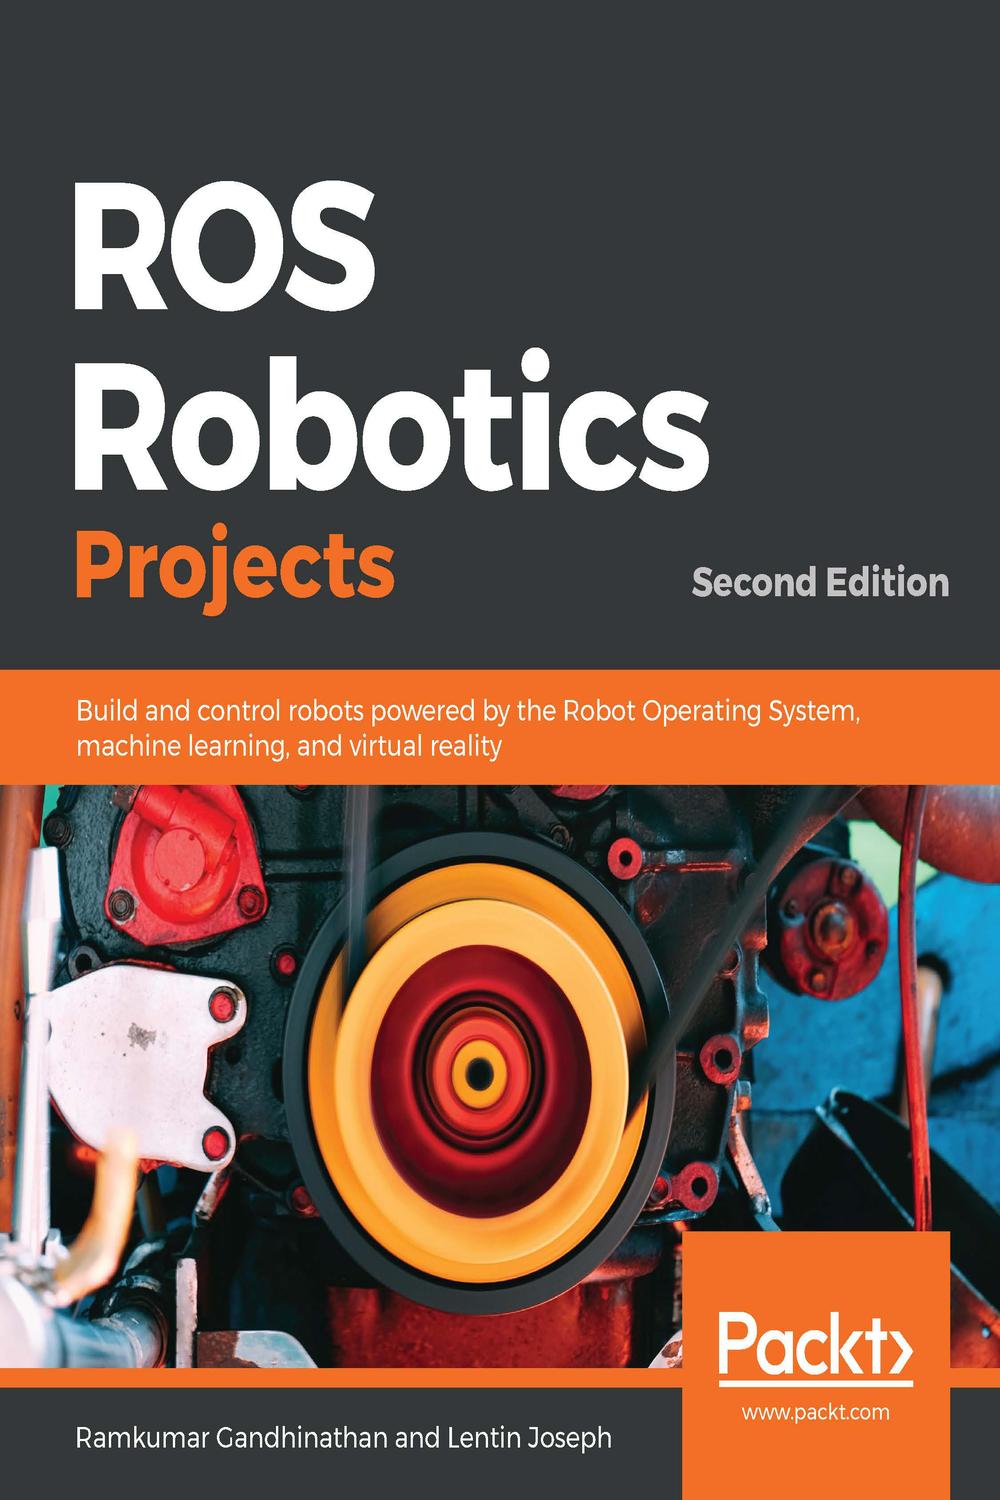 ros robotics projects pdf free download